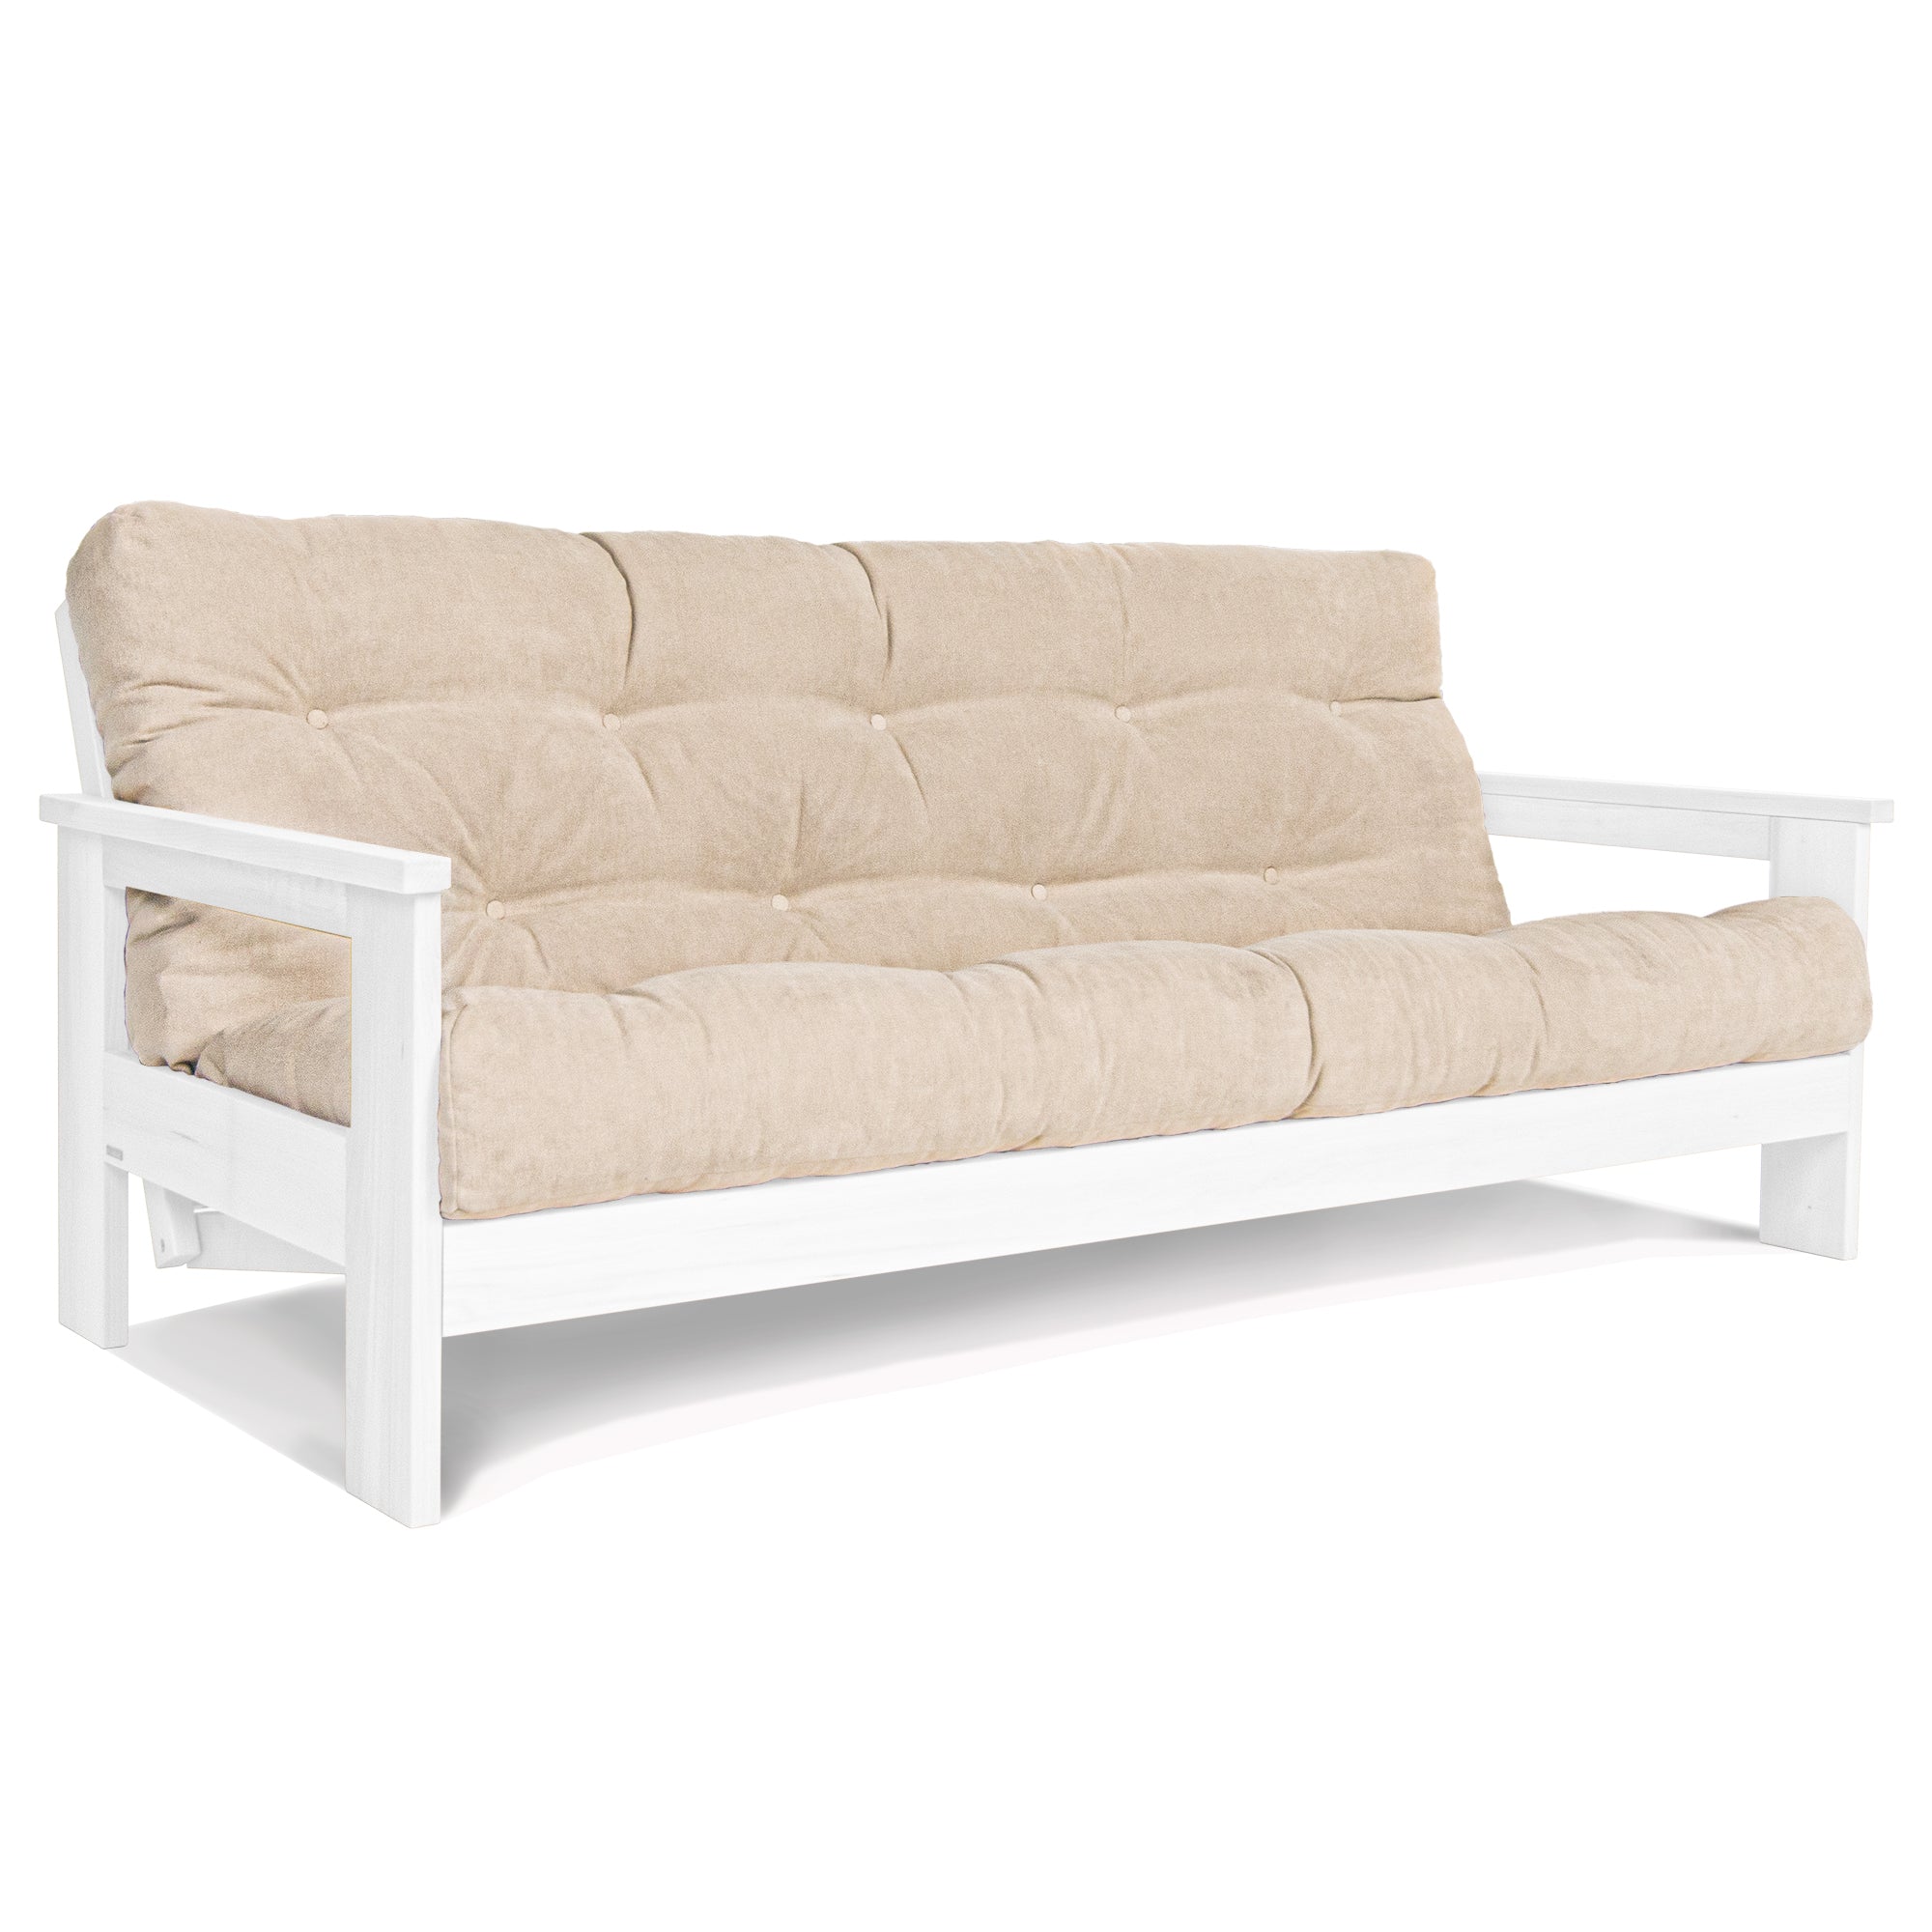 Раскладной диван-футон MEXICO, каркас белого цвета